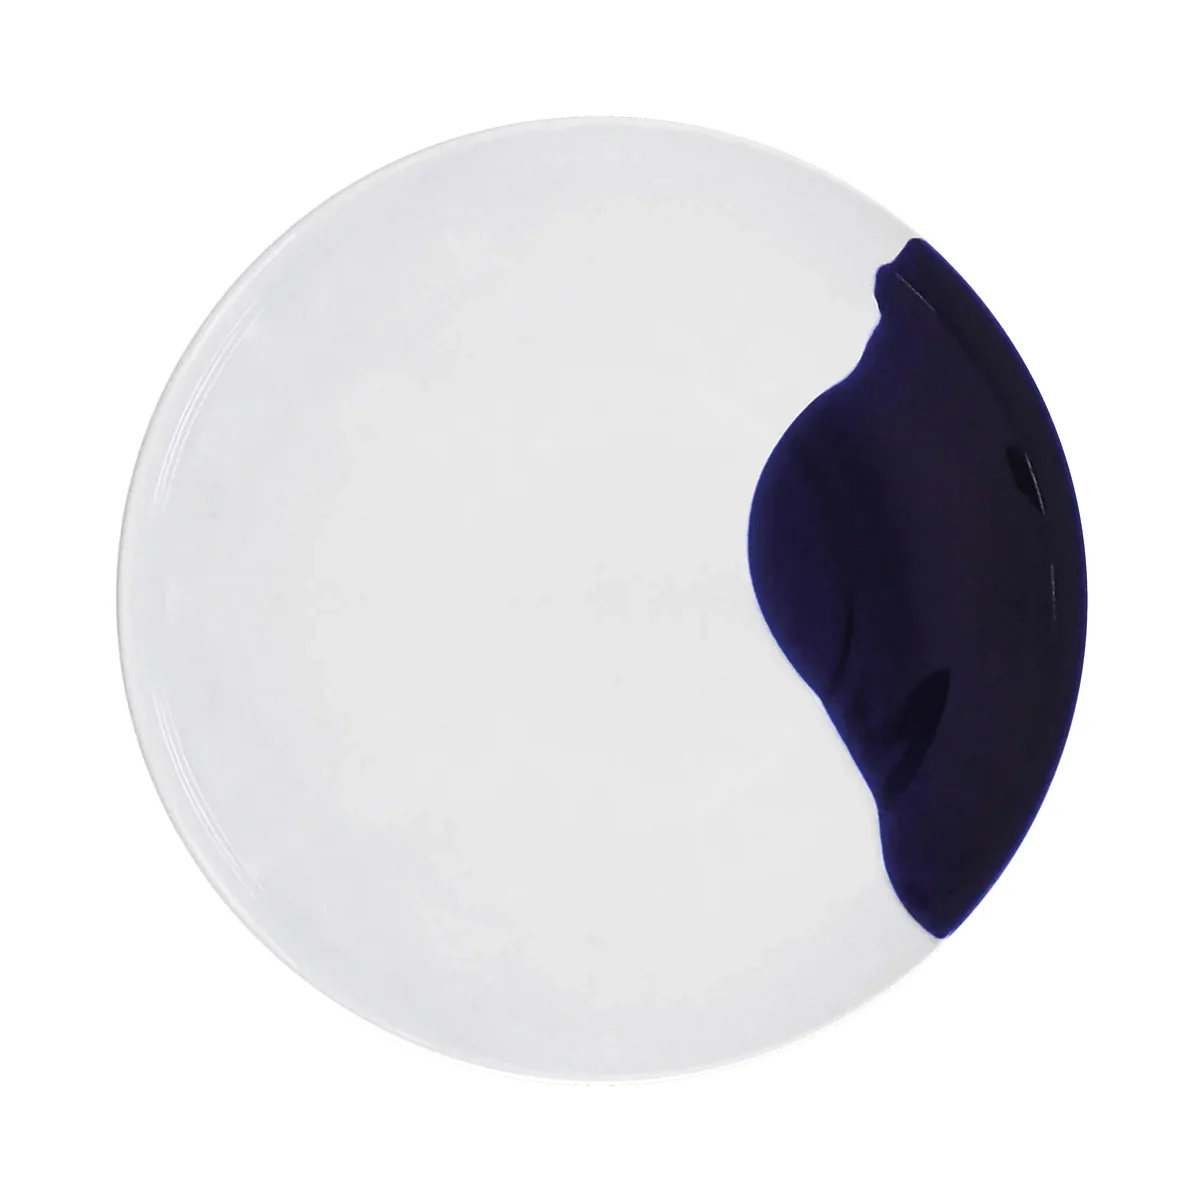 BLUE MYKONOS - 29 cm plate